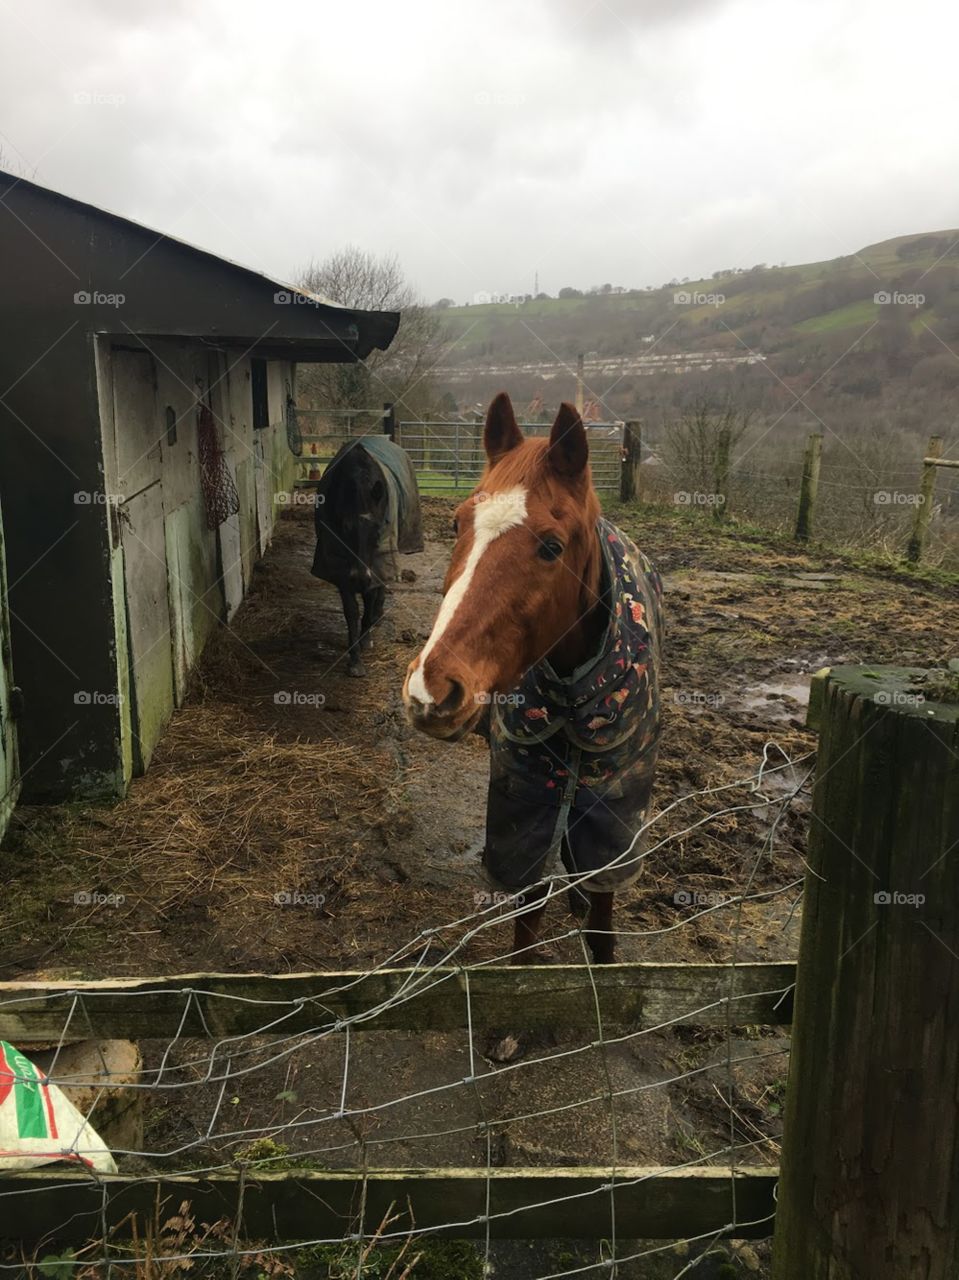 Rainy days on the farm- even the horses sported their rain coat to keep them warm during the winter rain. 